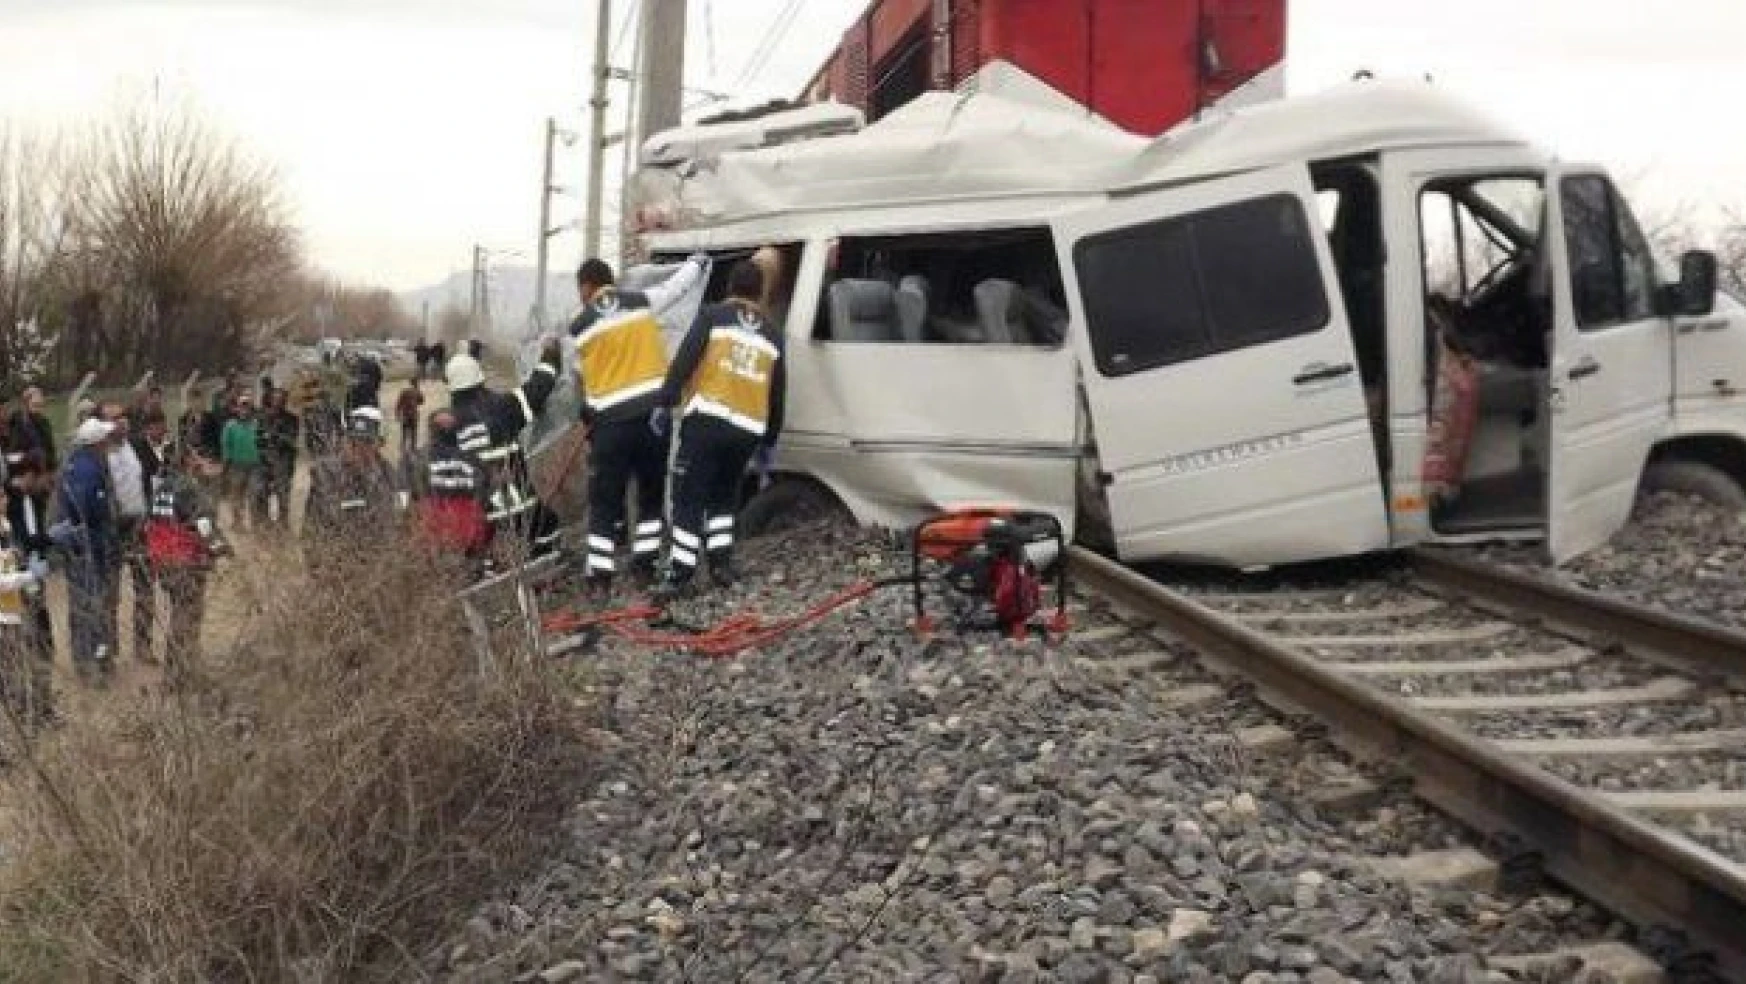 Malatya'da tren, öğrenci servisini biçti: 1 öğrenci öldü 16 öğrenci yaralandı